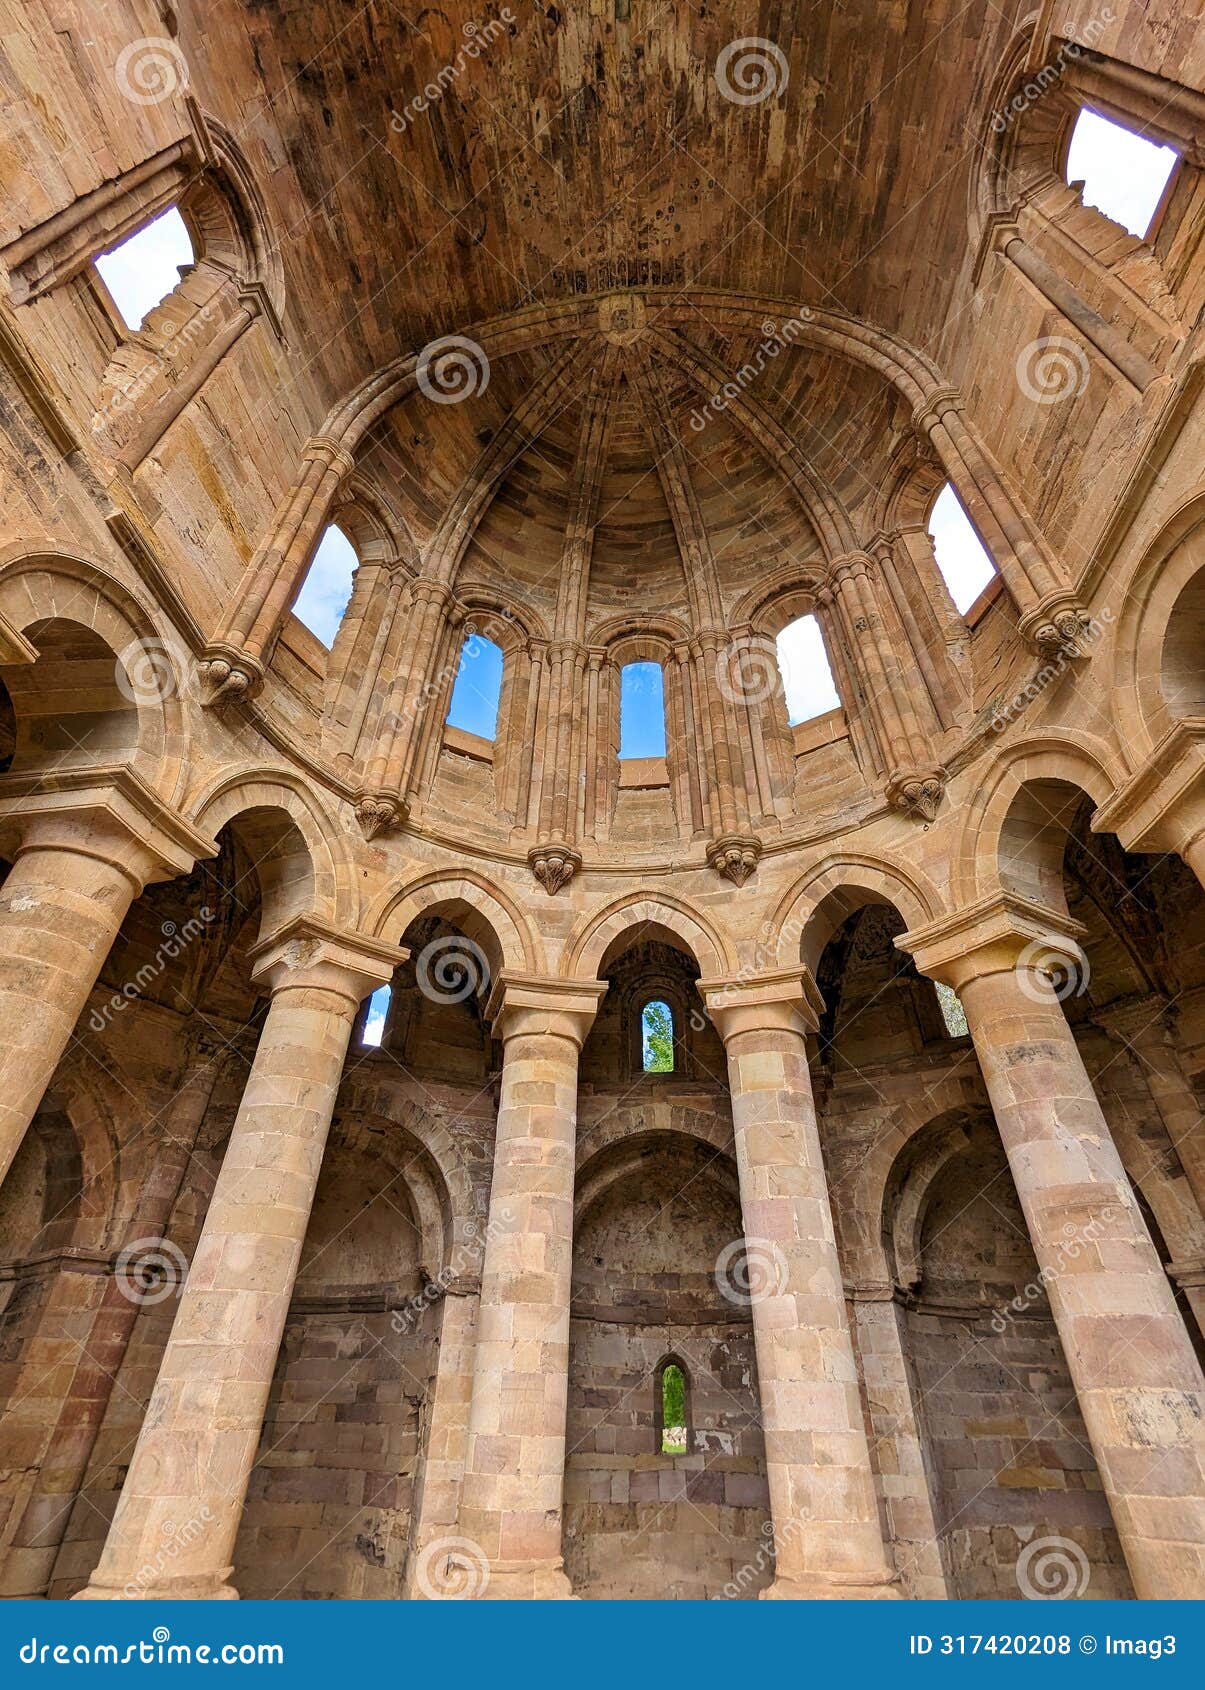 12th century cistercian monastery of santa maria de moreruela, granja de la moreruela, zamora, spain